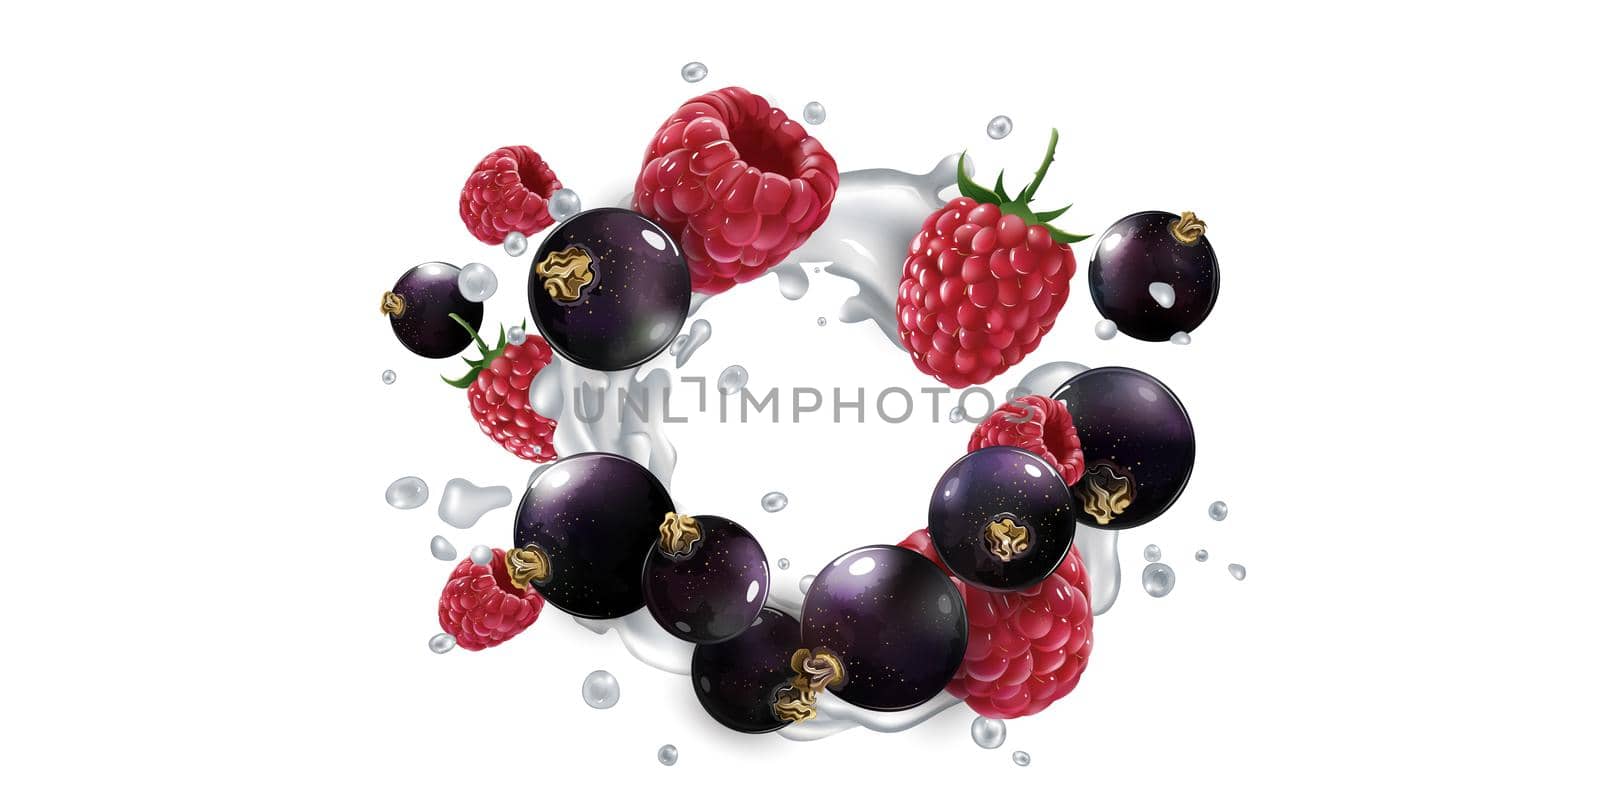 Black currants and raspberries in splashes of yogurt or milk. by ConceptCafe